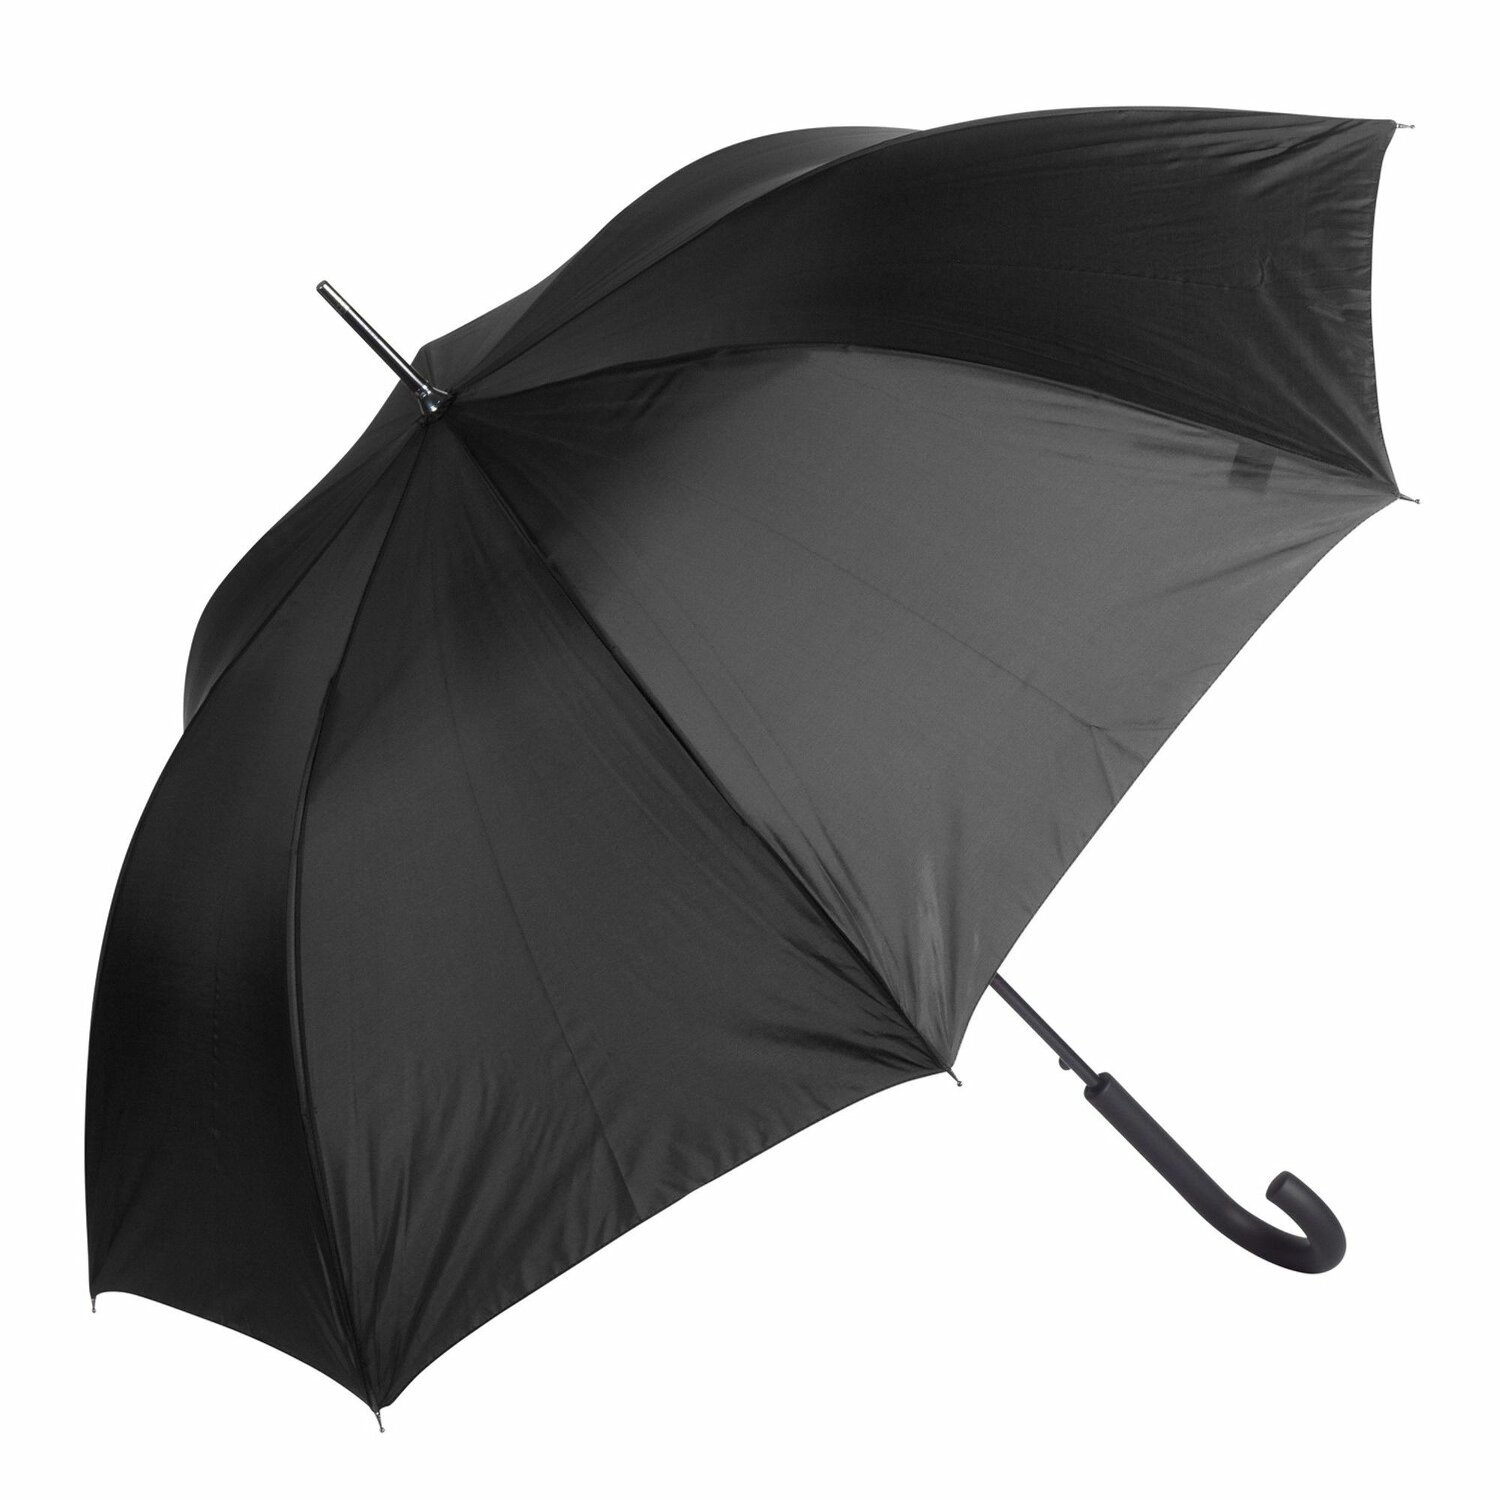 Samsonite Rain Pro Stok paraplu 87 black | Bagage24.nl